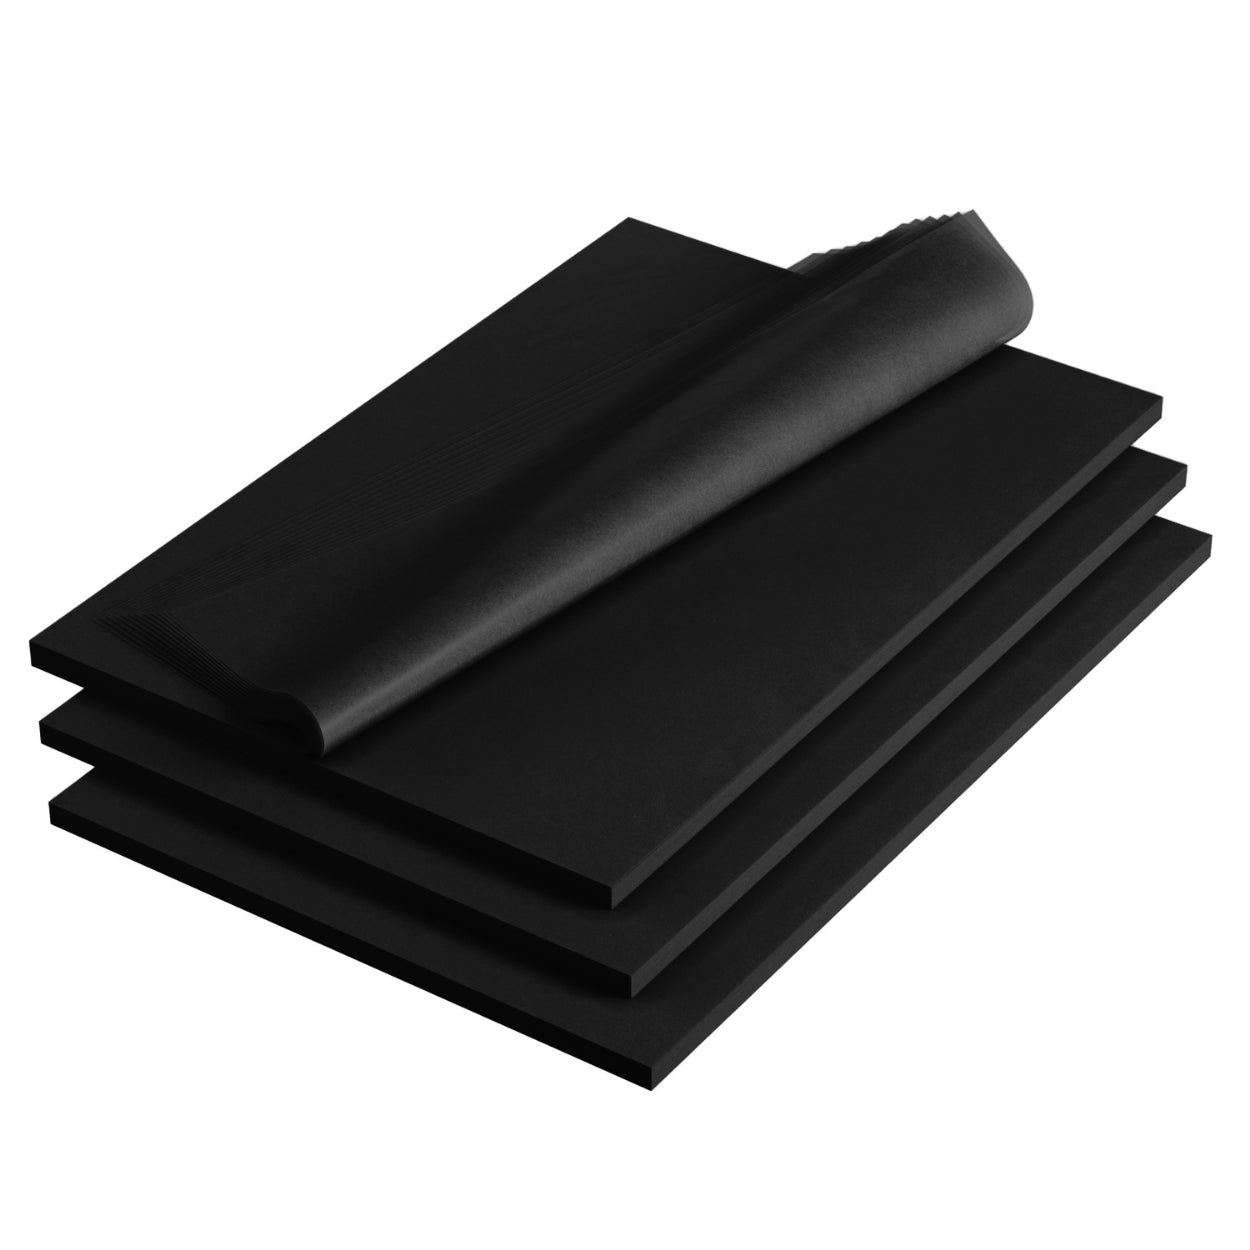 Wholesale Black Tissue Paper in Bulk - 20x30 inch - 480 Sheets